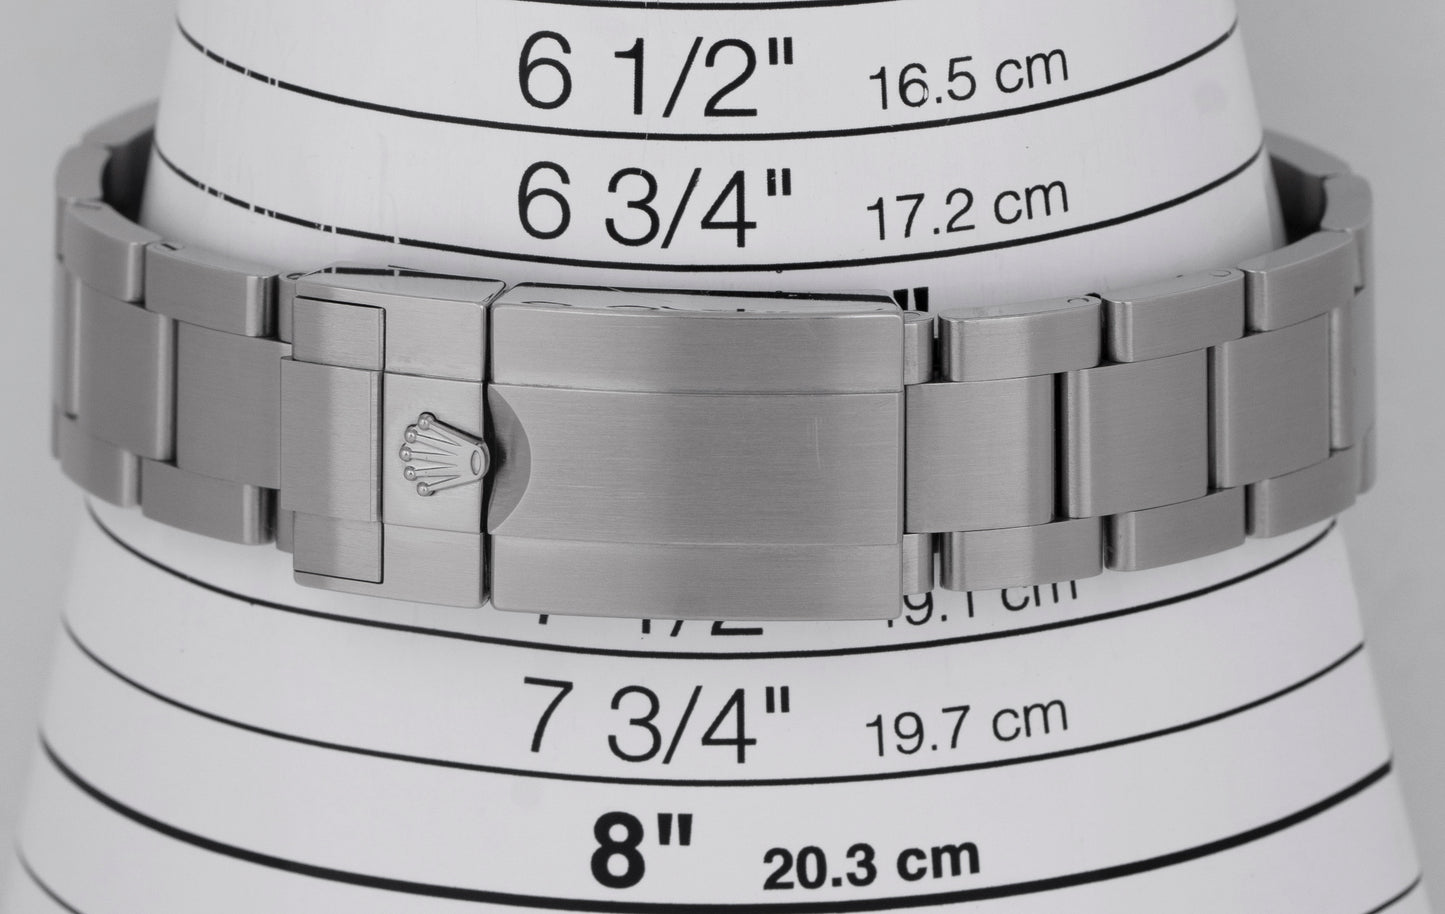 2022 NEW PAPERS Rolex Air-King 40mm Green Black Steel Arabic Watch 126900 BOX